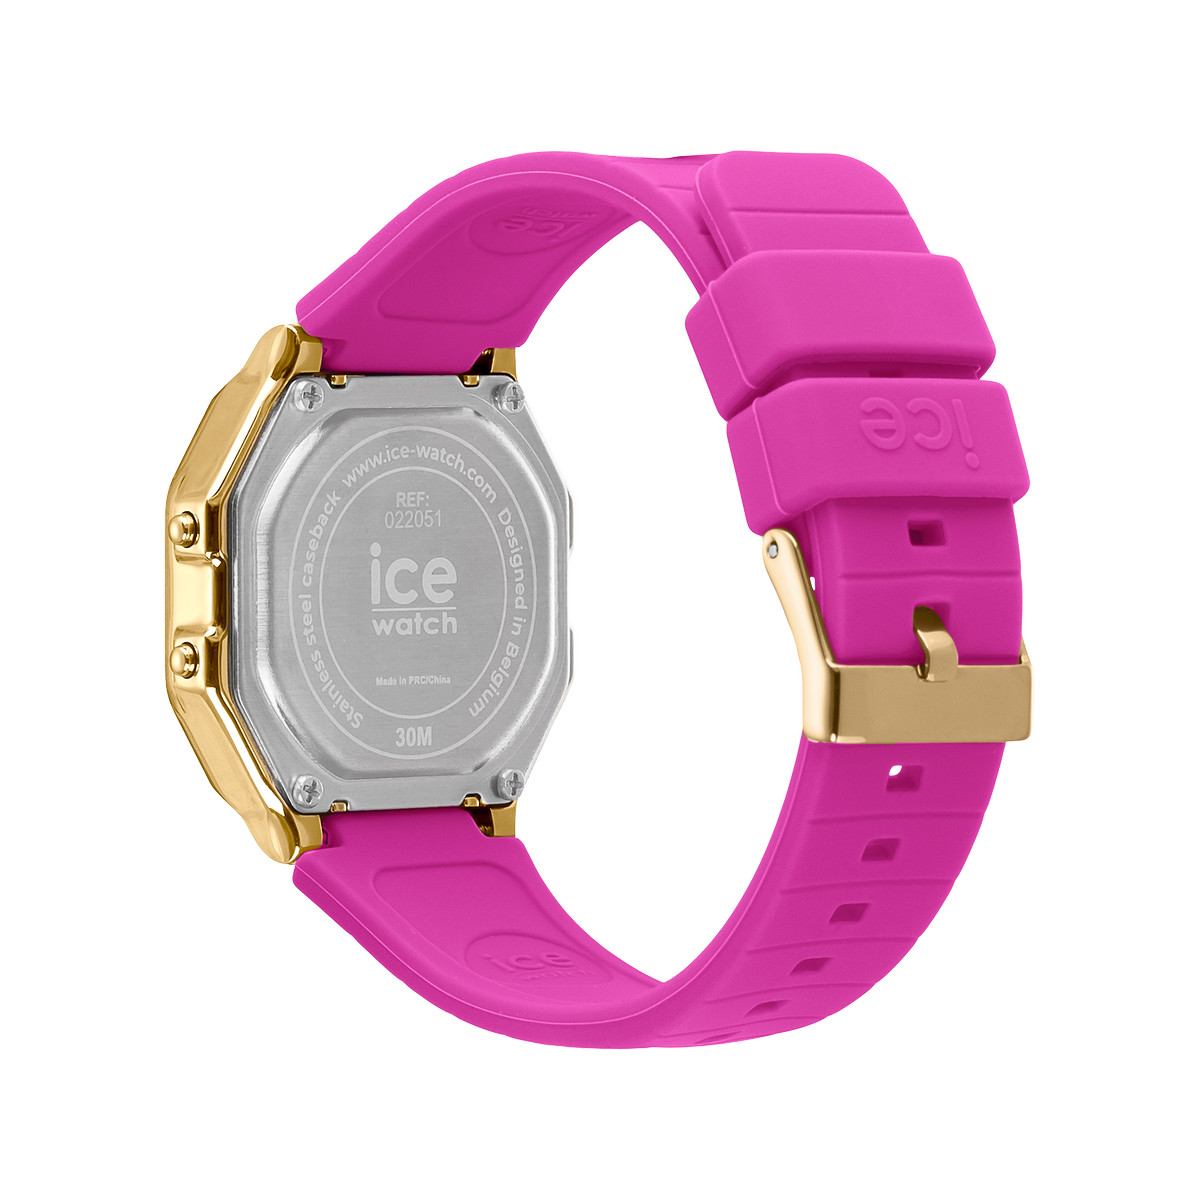 Montre ICE WATCH Ice digit retro femme bracelet silicone rose - vue 3